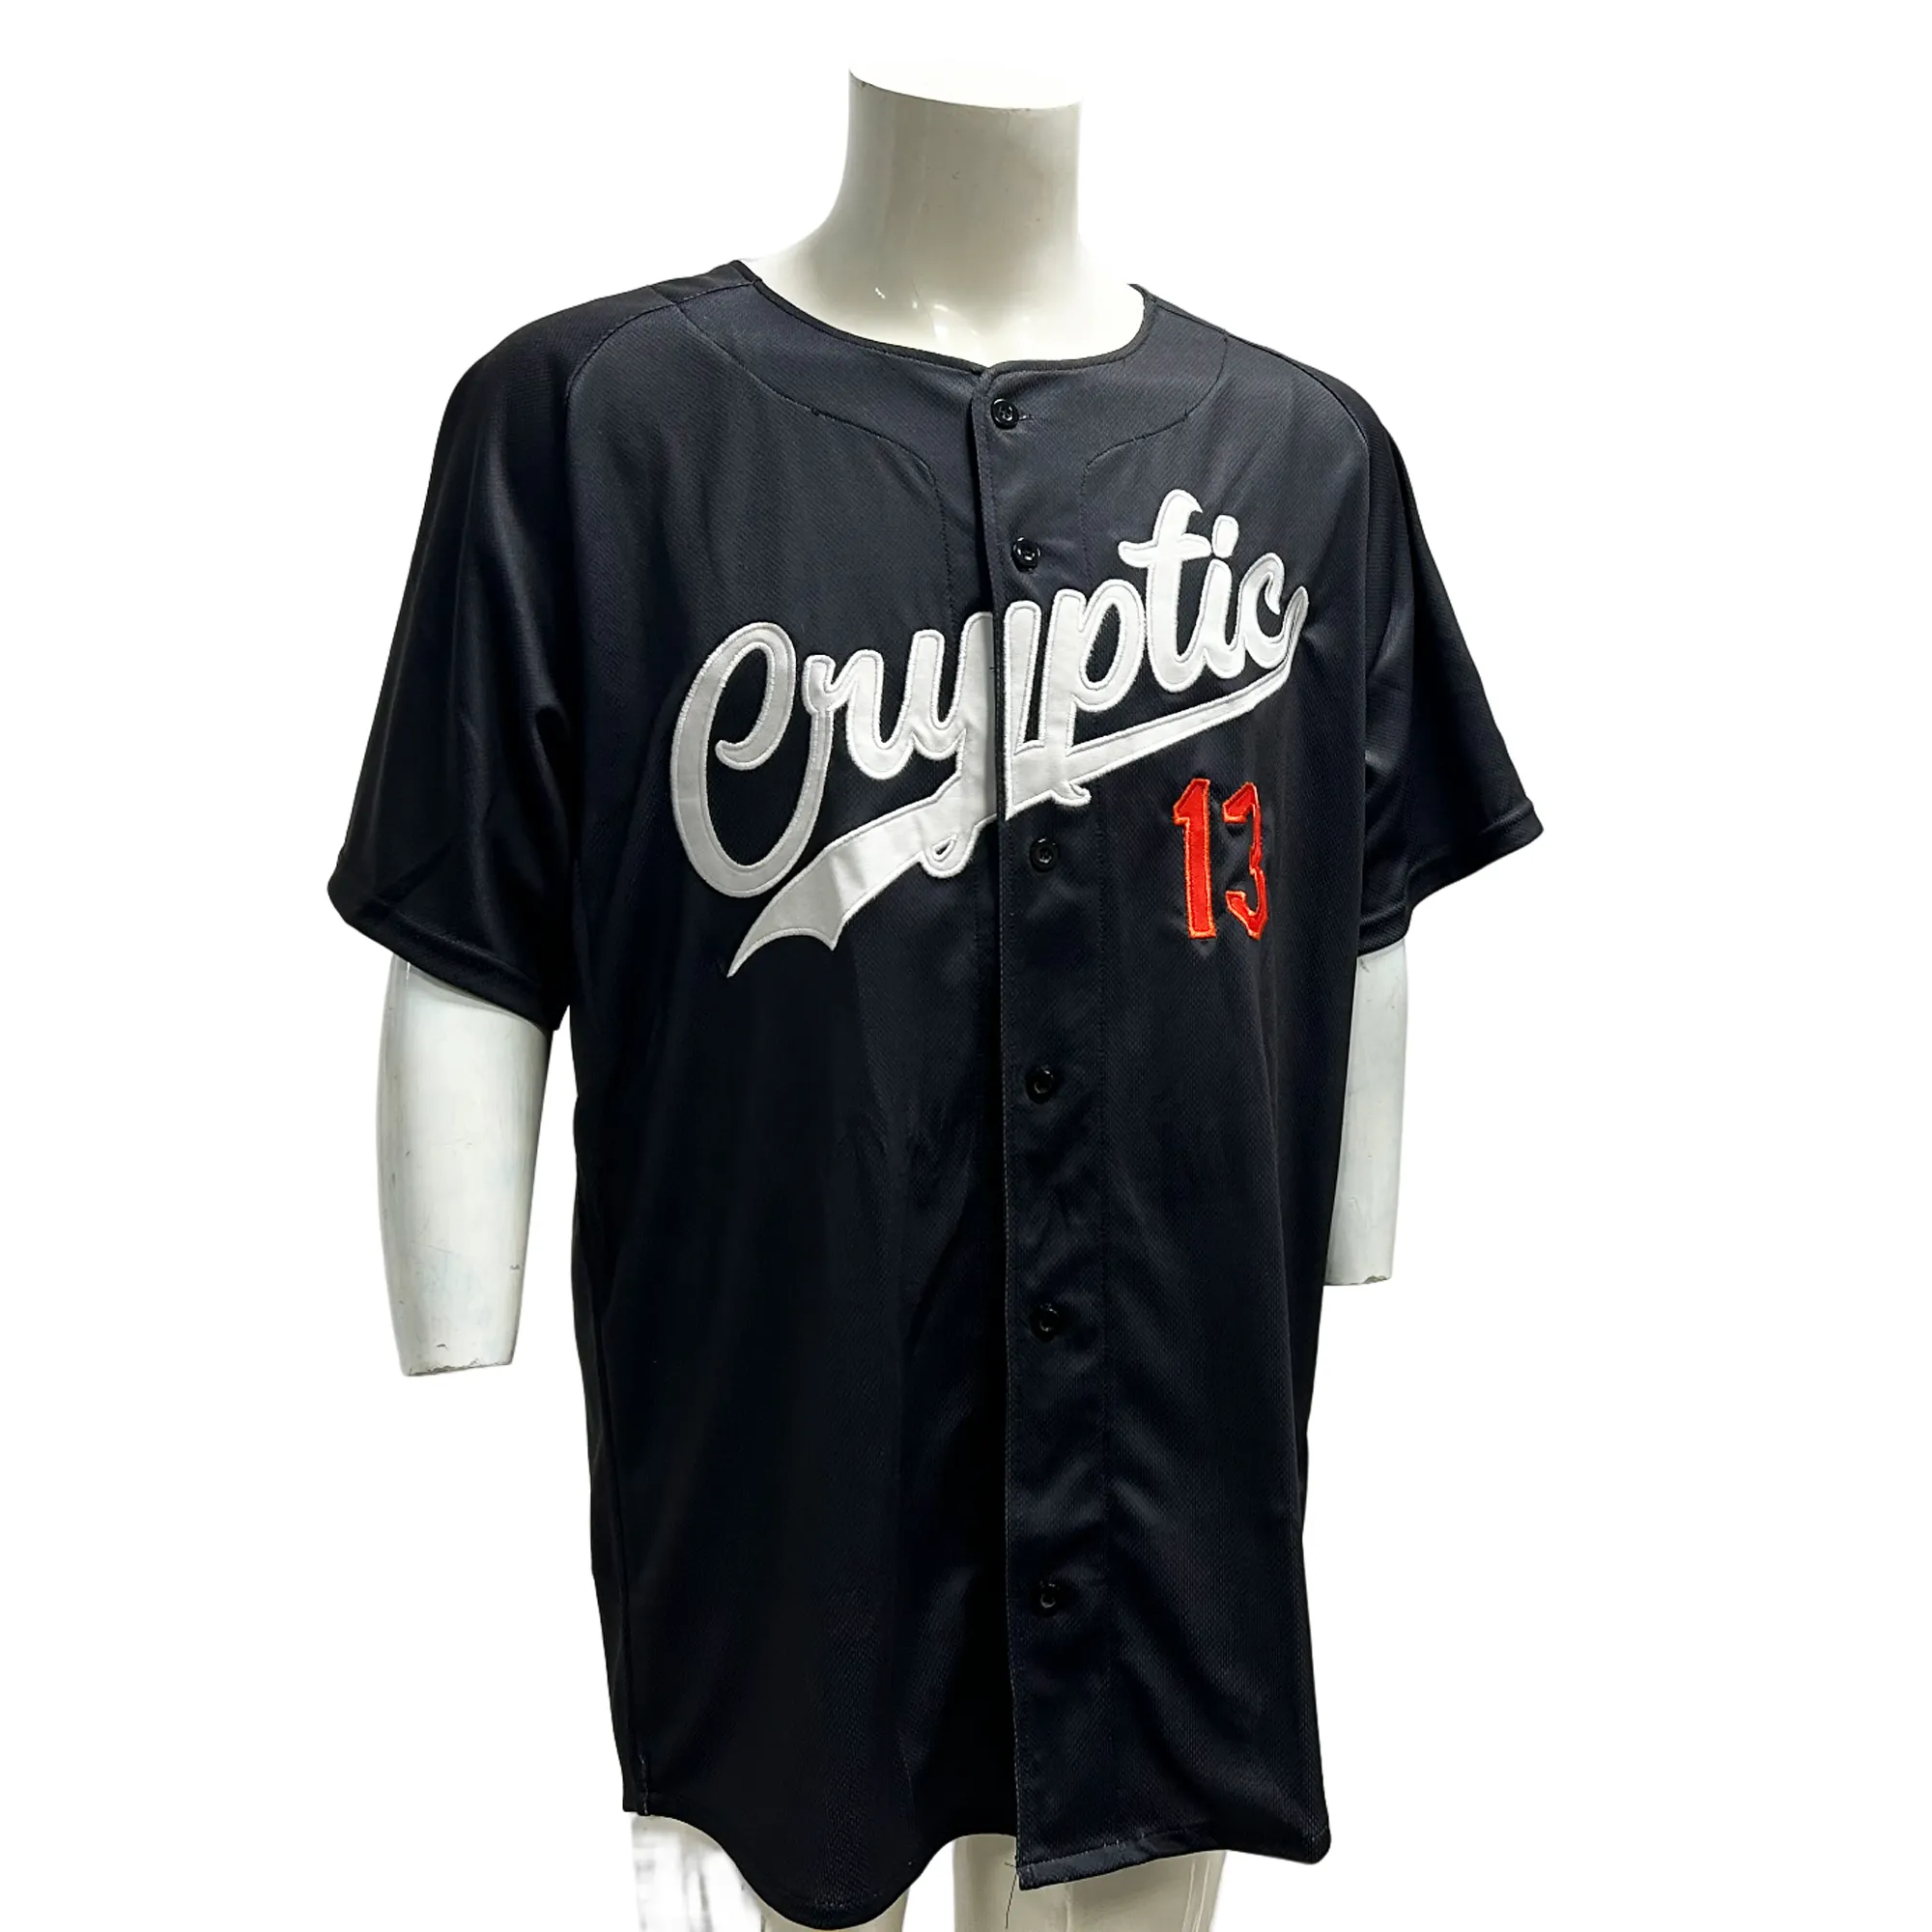 Custom Design Men Printed Team Sportswear Outdoor Quick Dry T-shirt Baseball Jerseys Softball Shirt Gymnastic Top Wear